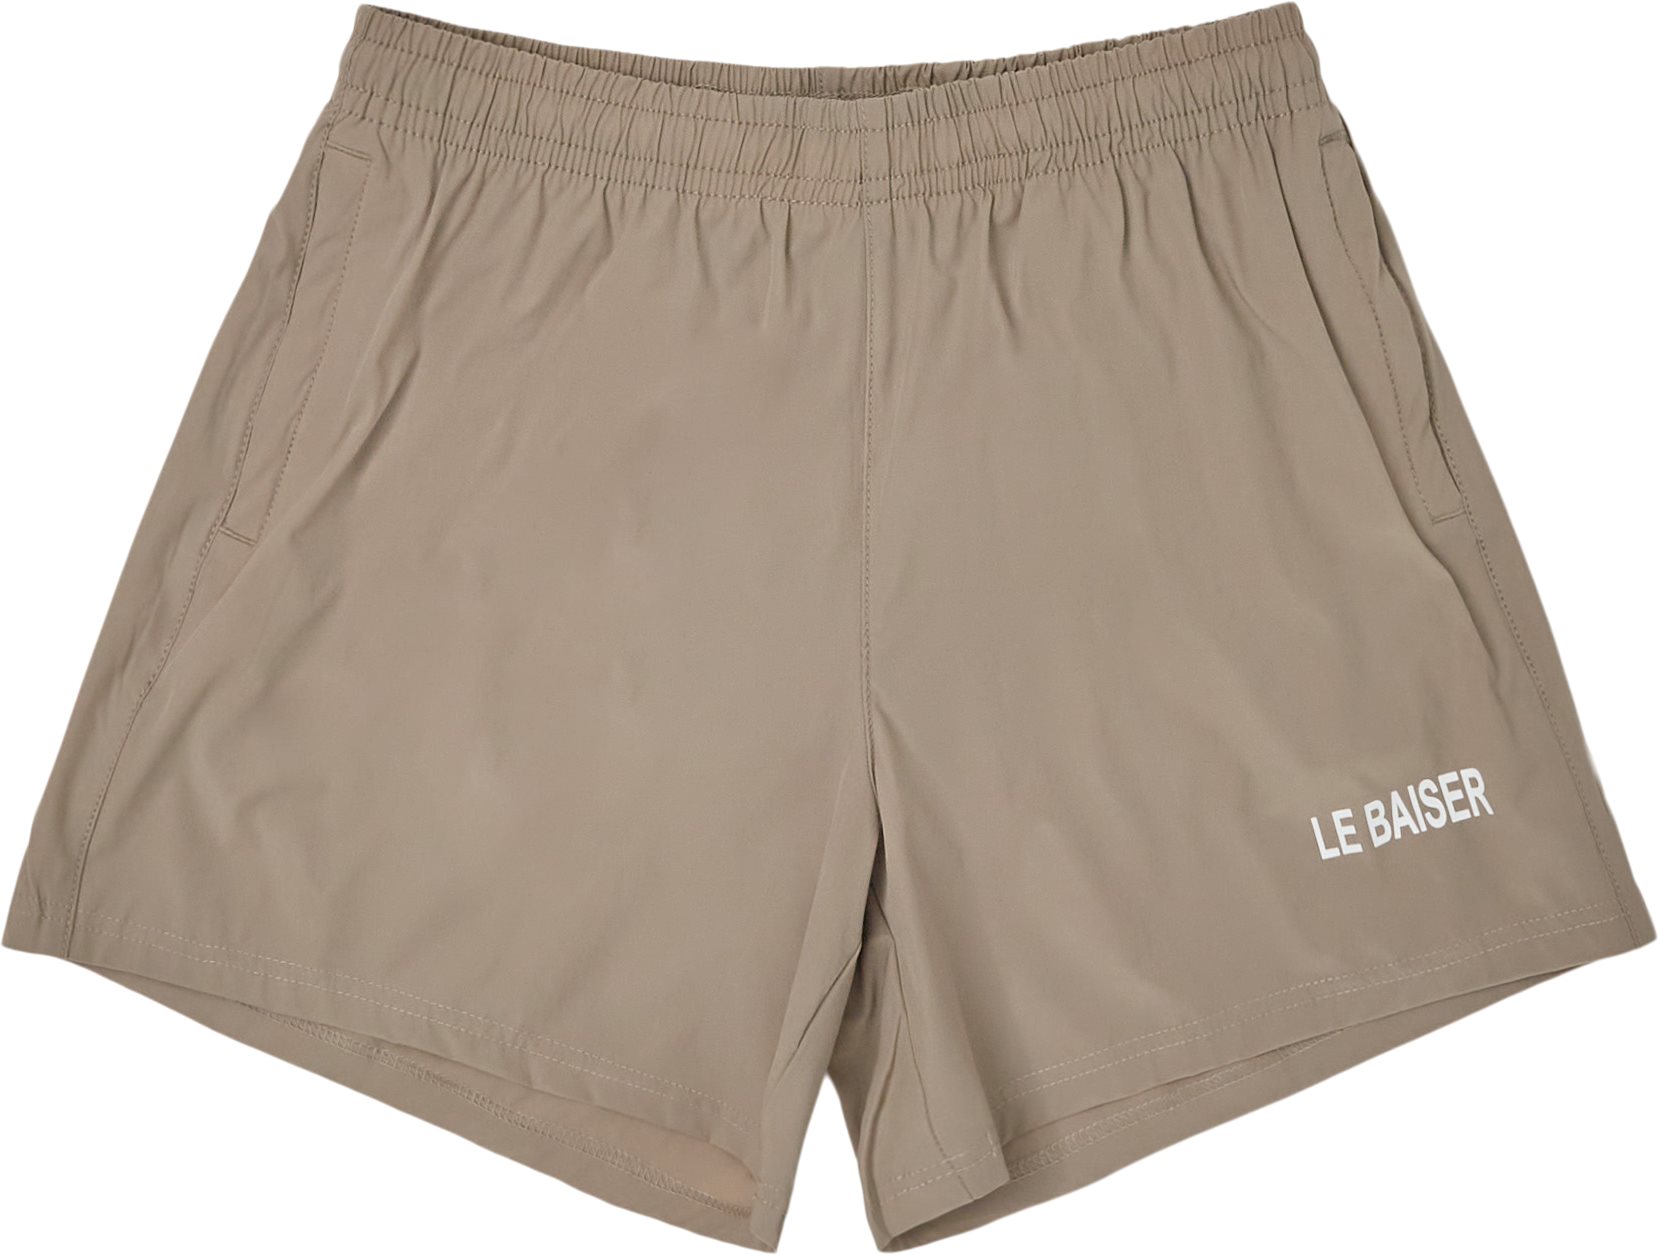 Marche Shorts - Shorts - Regular fit - Sand